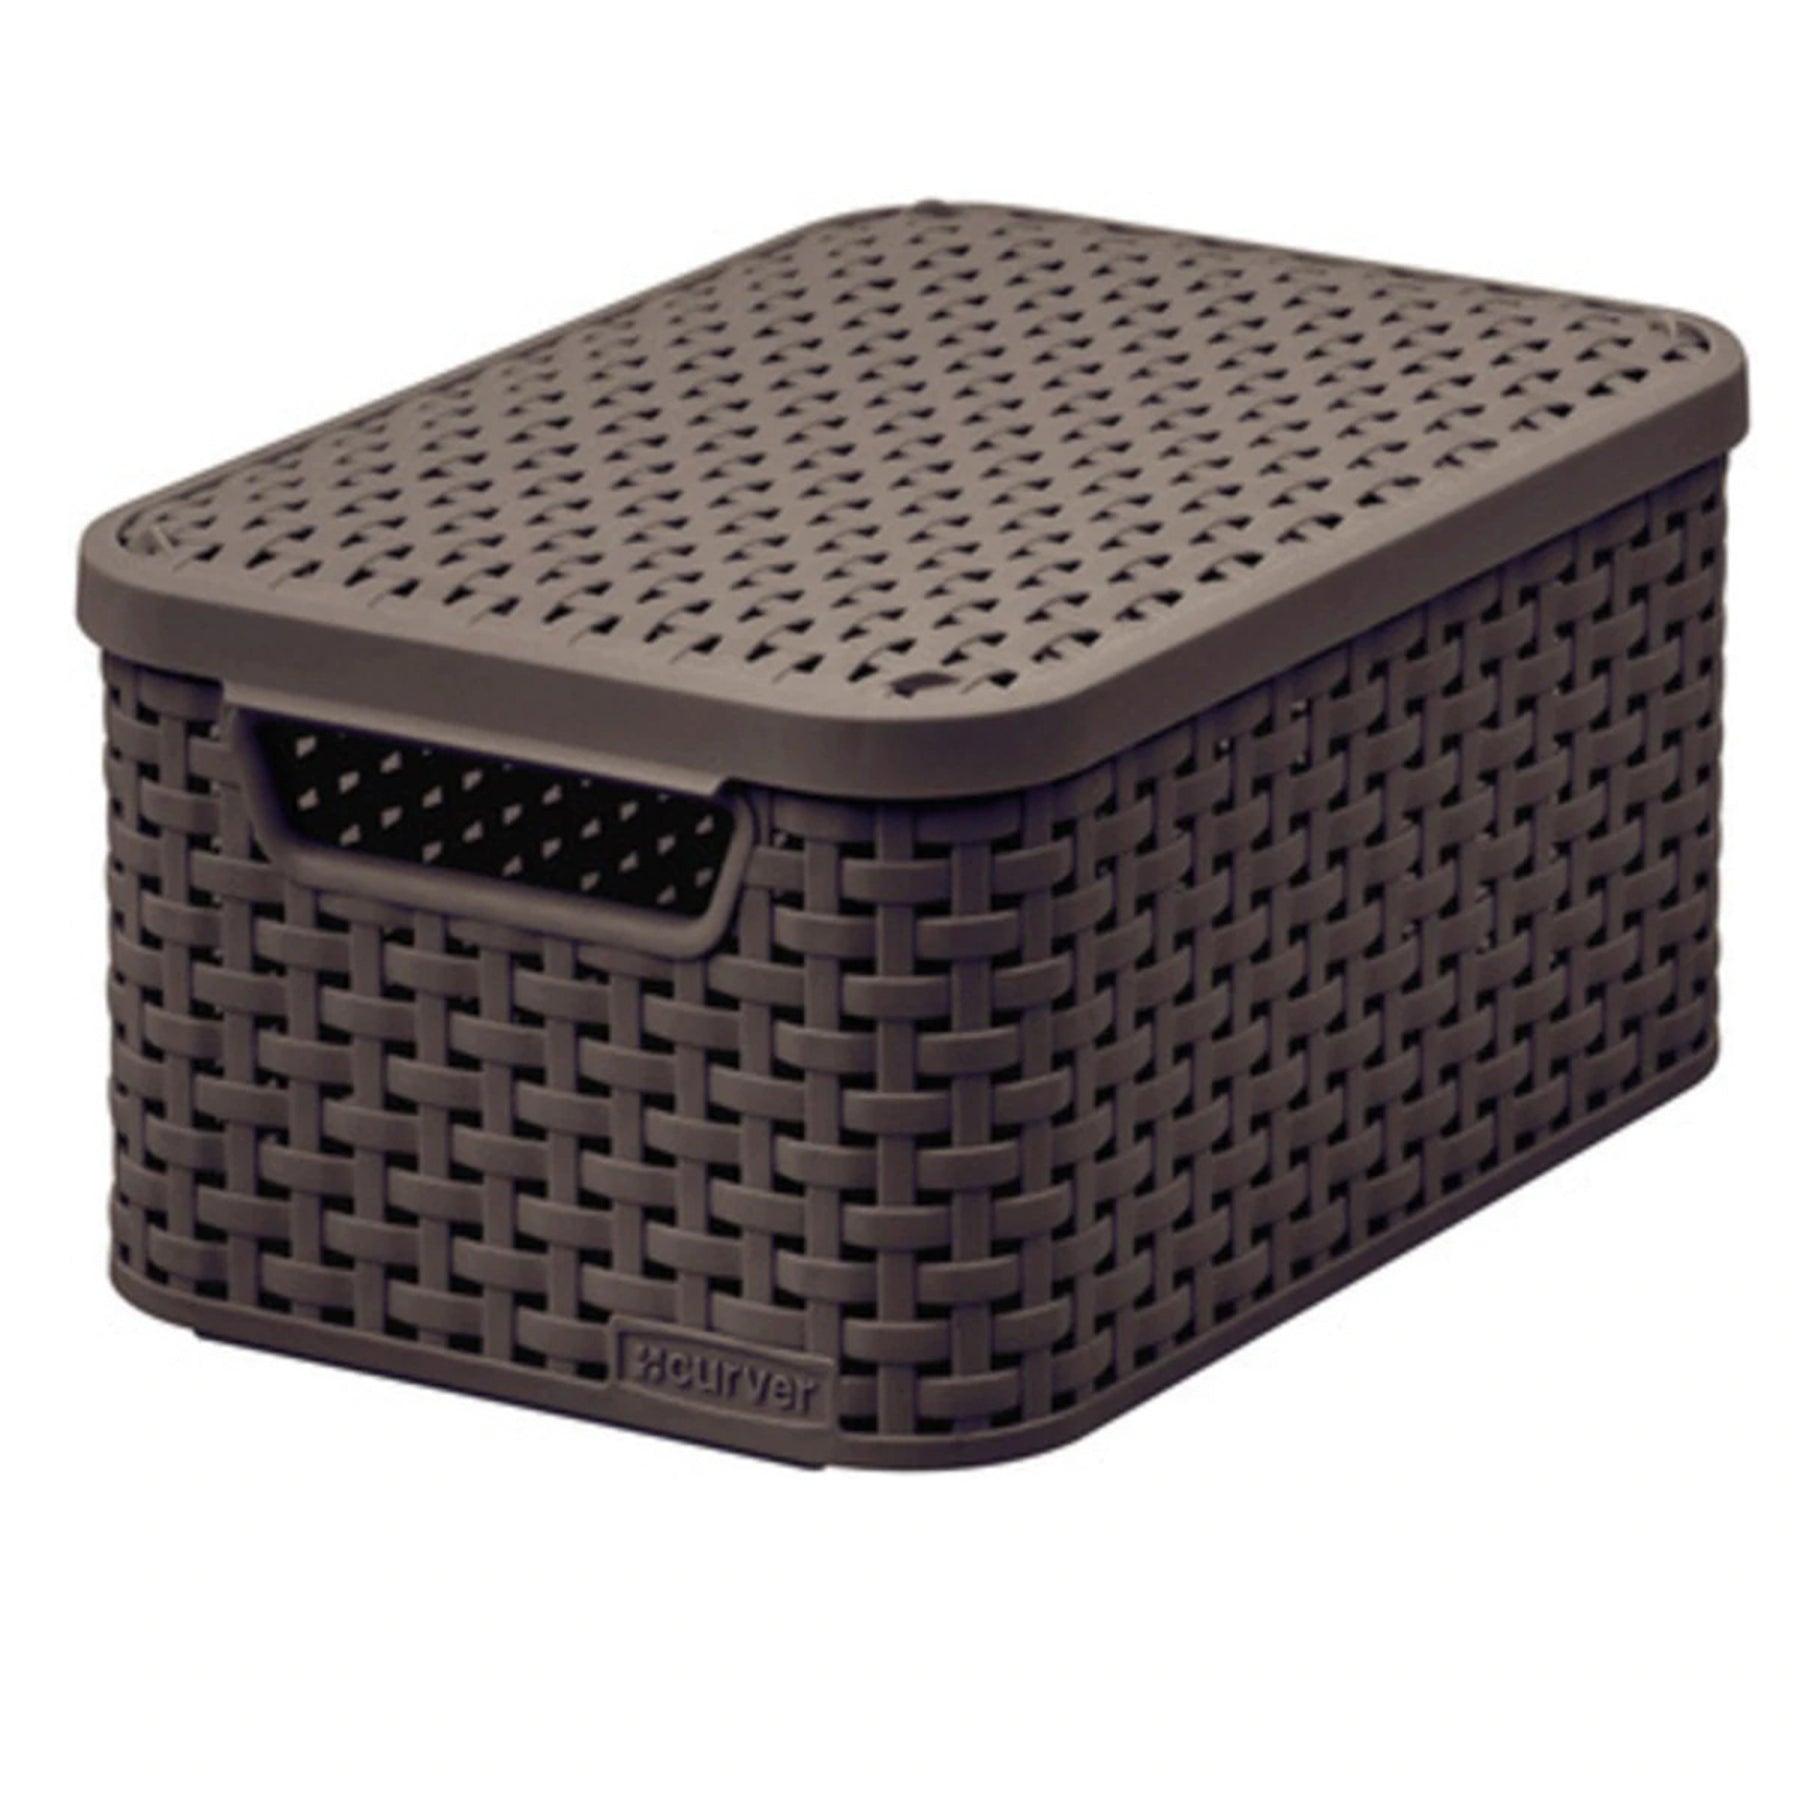 Storage basket with lid and handles - Brown